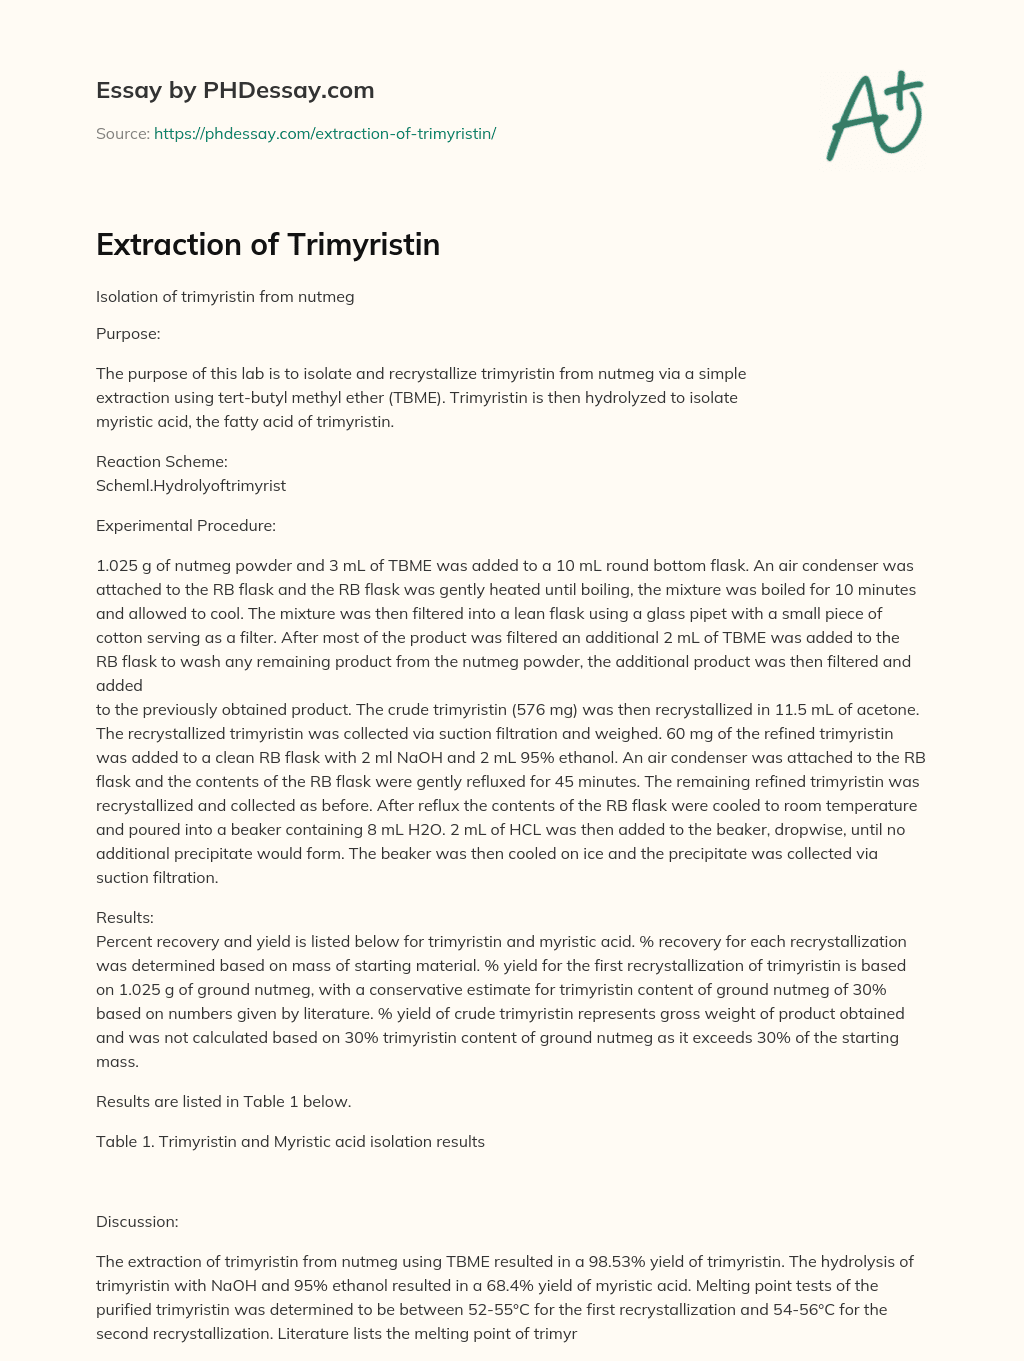 Extraction of Trimyristin essay